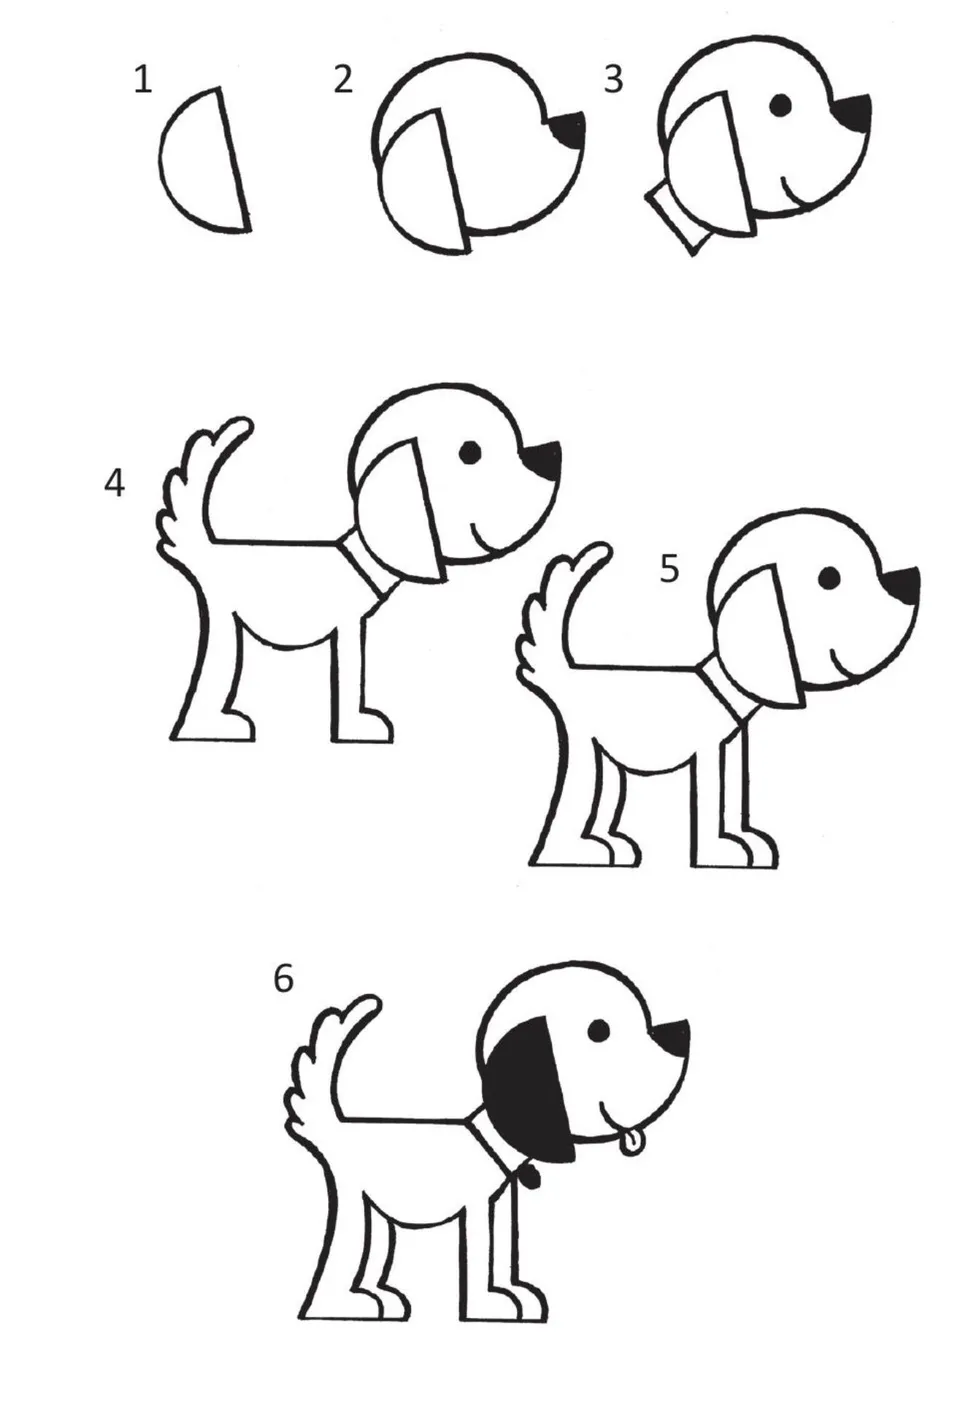 Схема рисования собаки